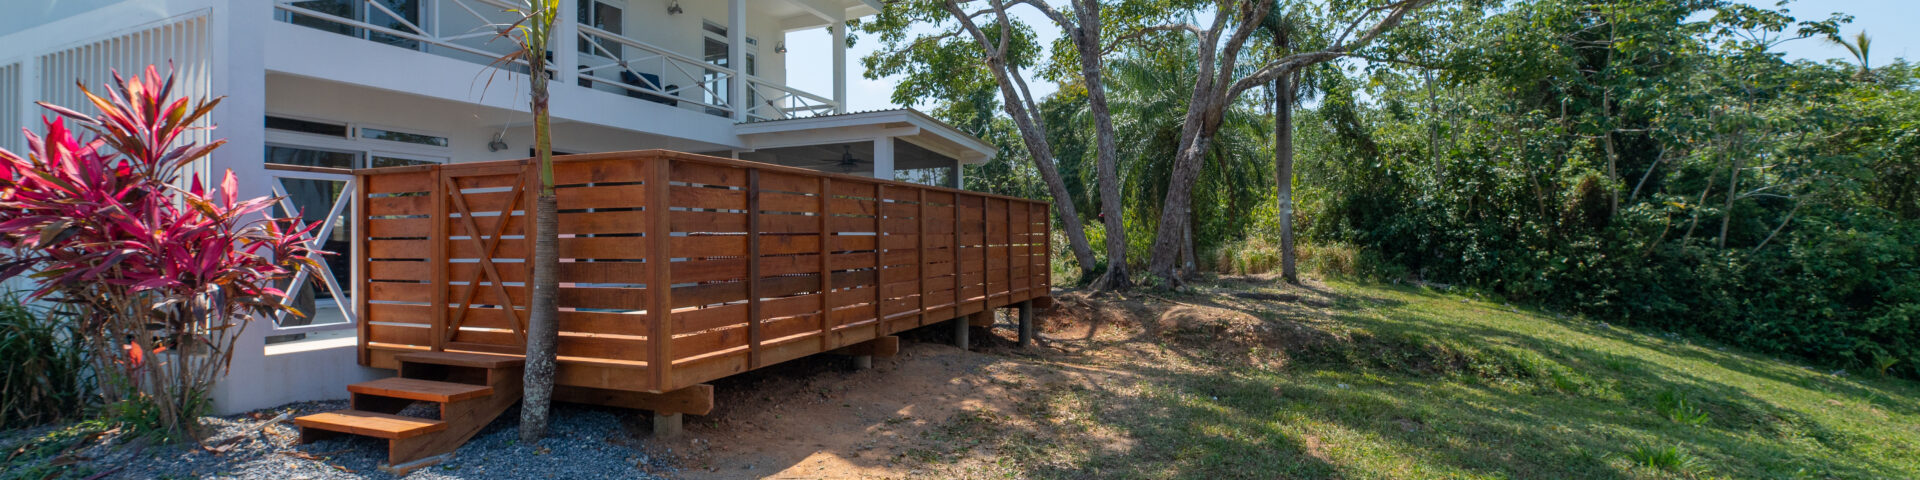 Poquito de Paraíso is a newly built 2 bed, 2 bath house with a 1 bed, 1 bath casita.